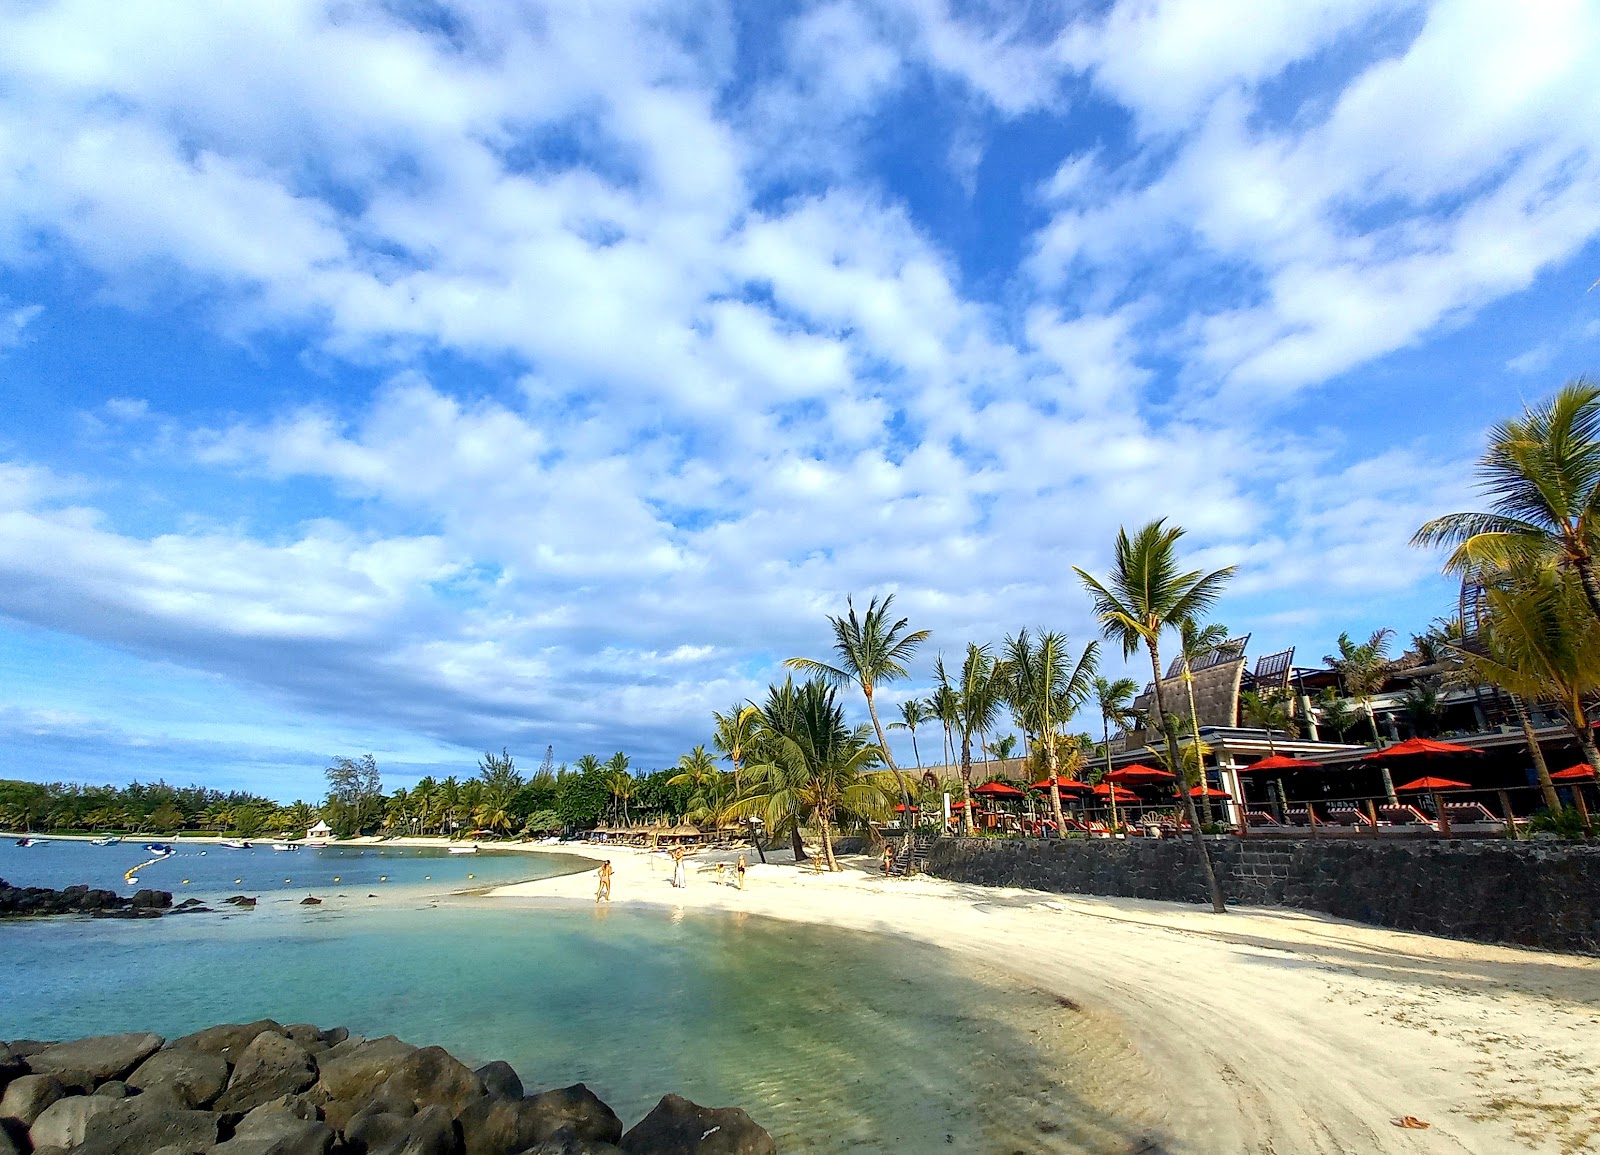 Foto de CocoNuts Resot Beach - lugar popular entre os apreciadores de relaxamento